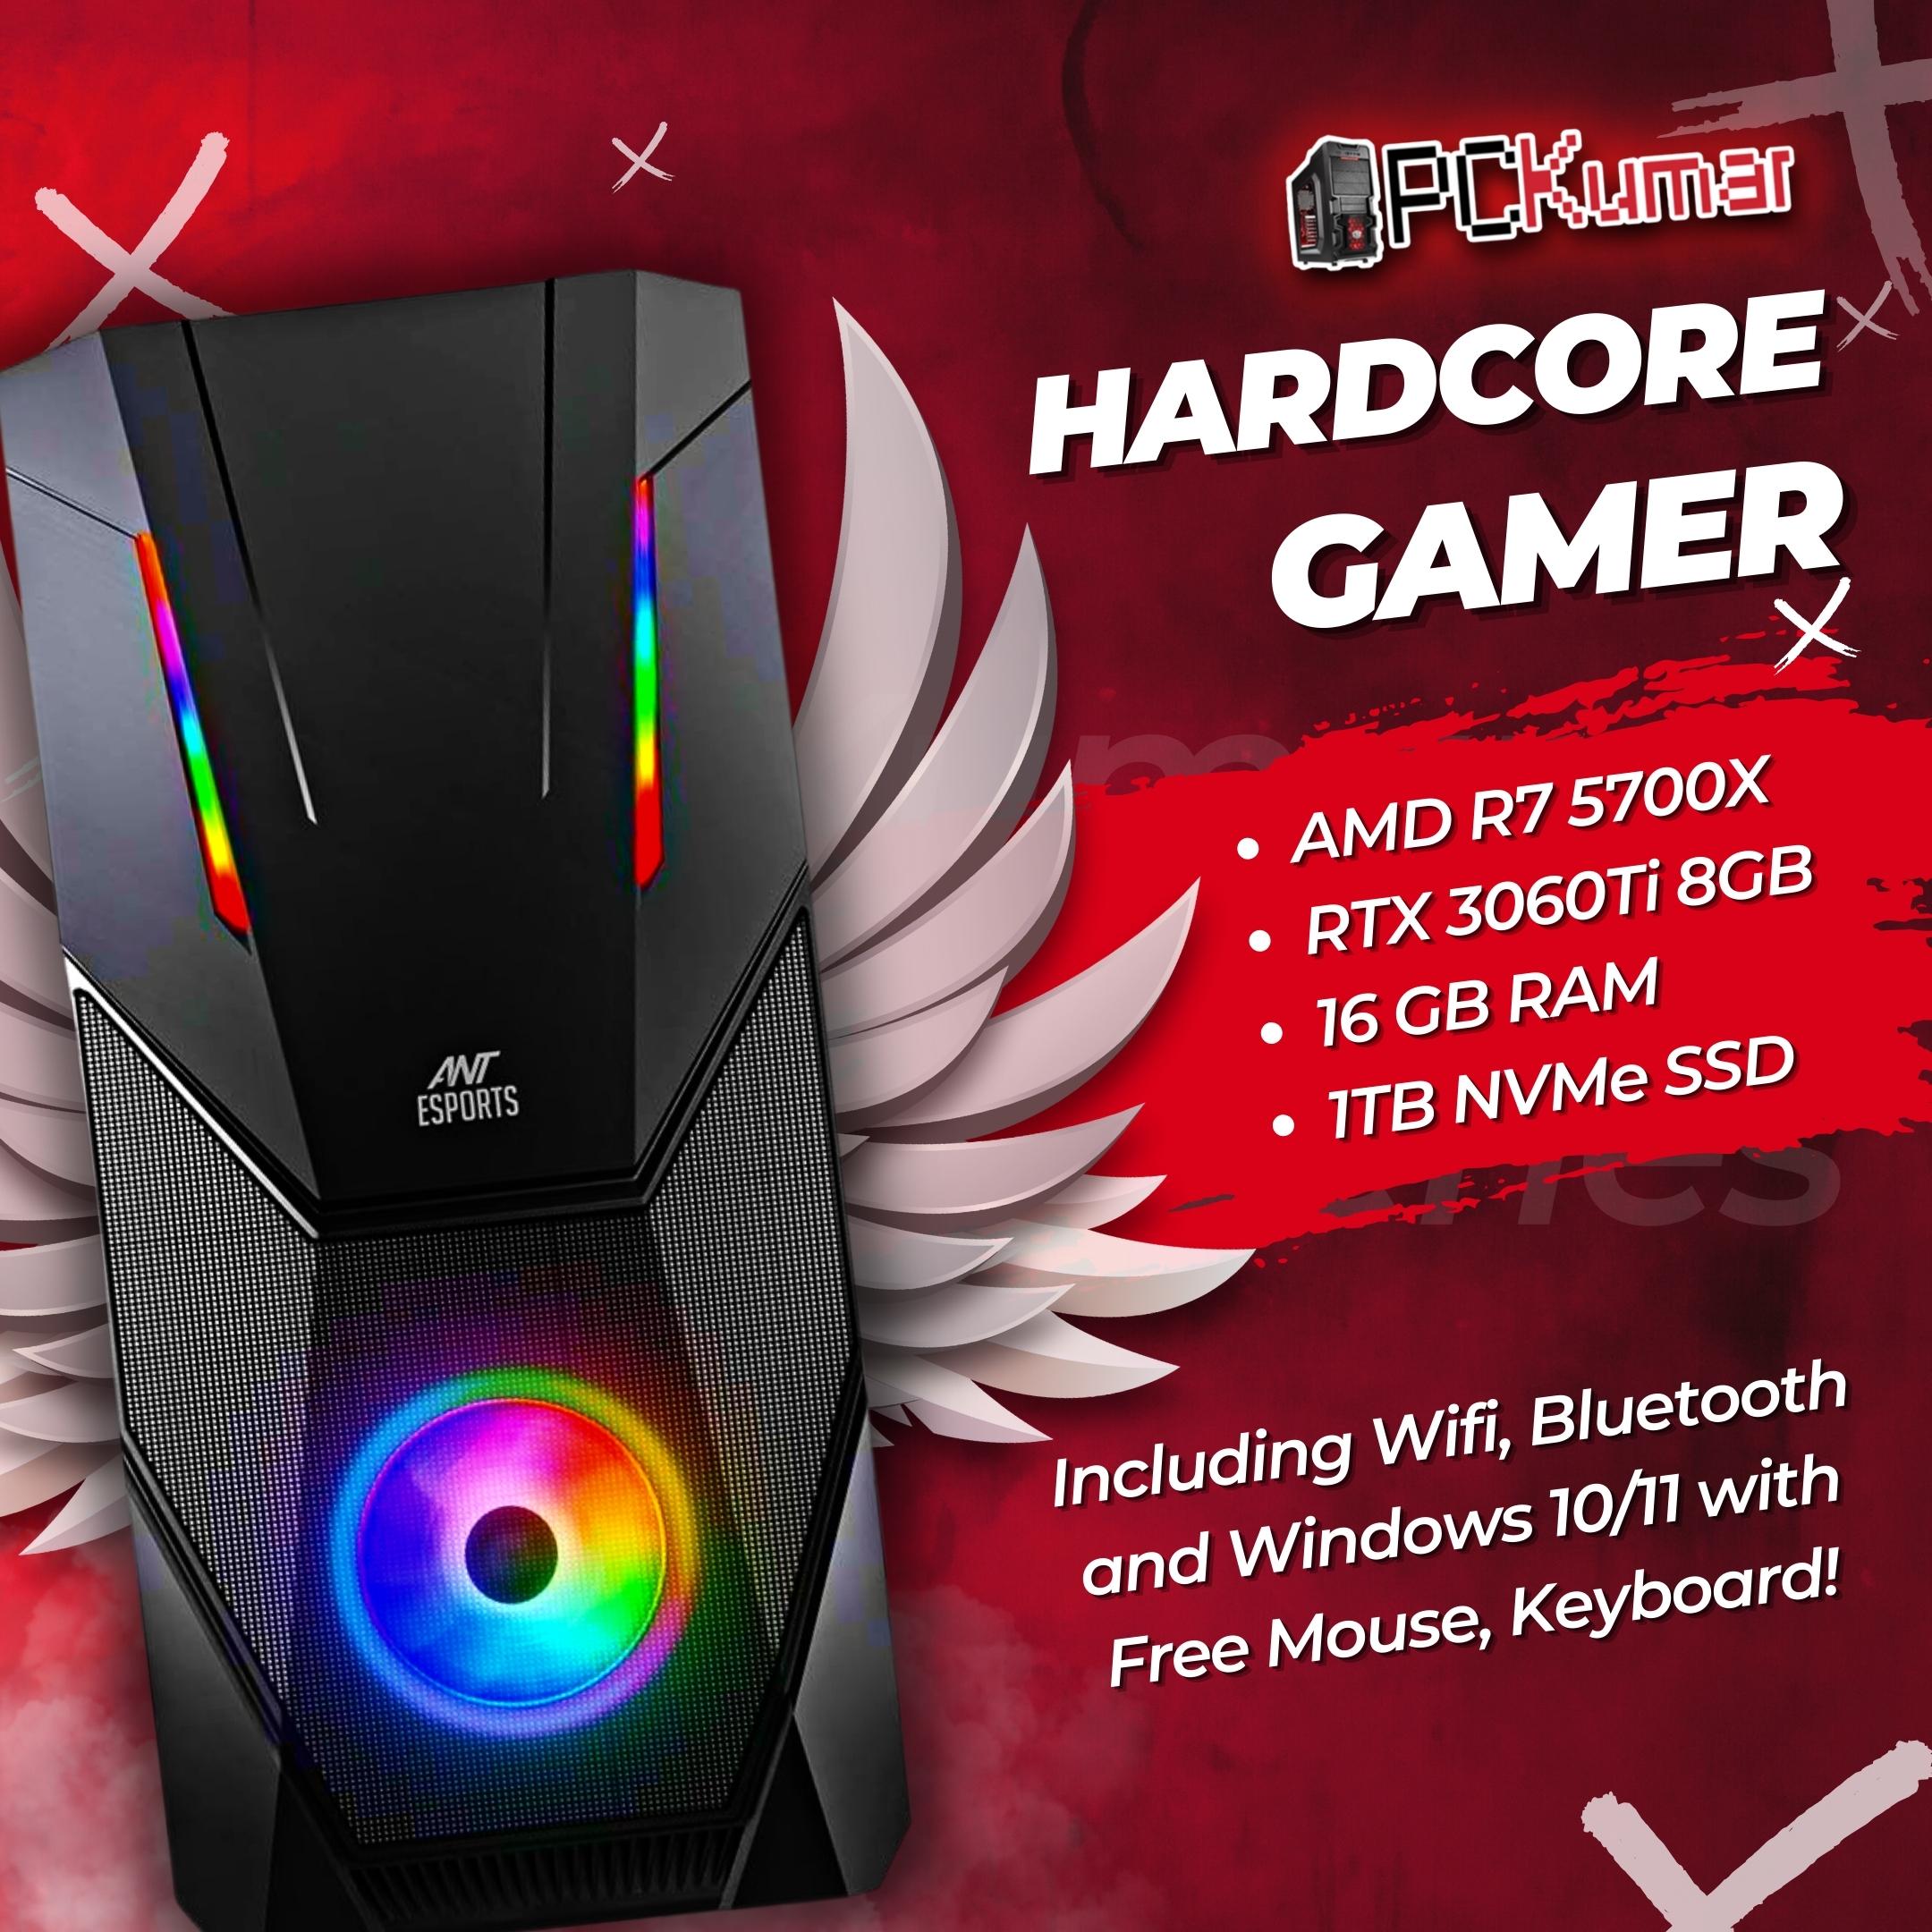 Hardcore Gamer with AMD Ryzen 7 5700X + RTX 3060Ti